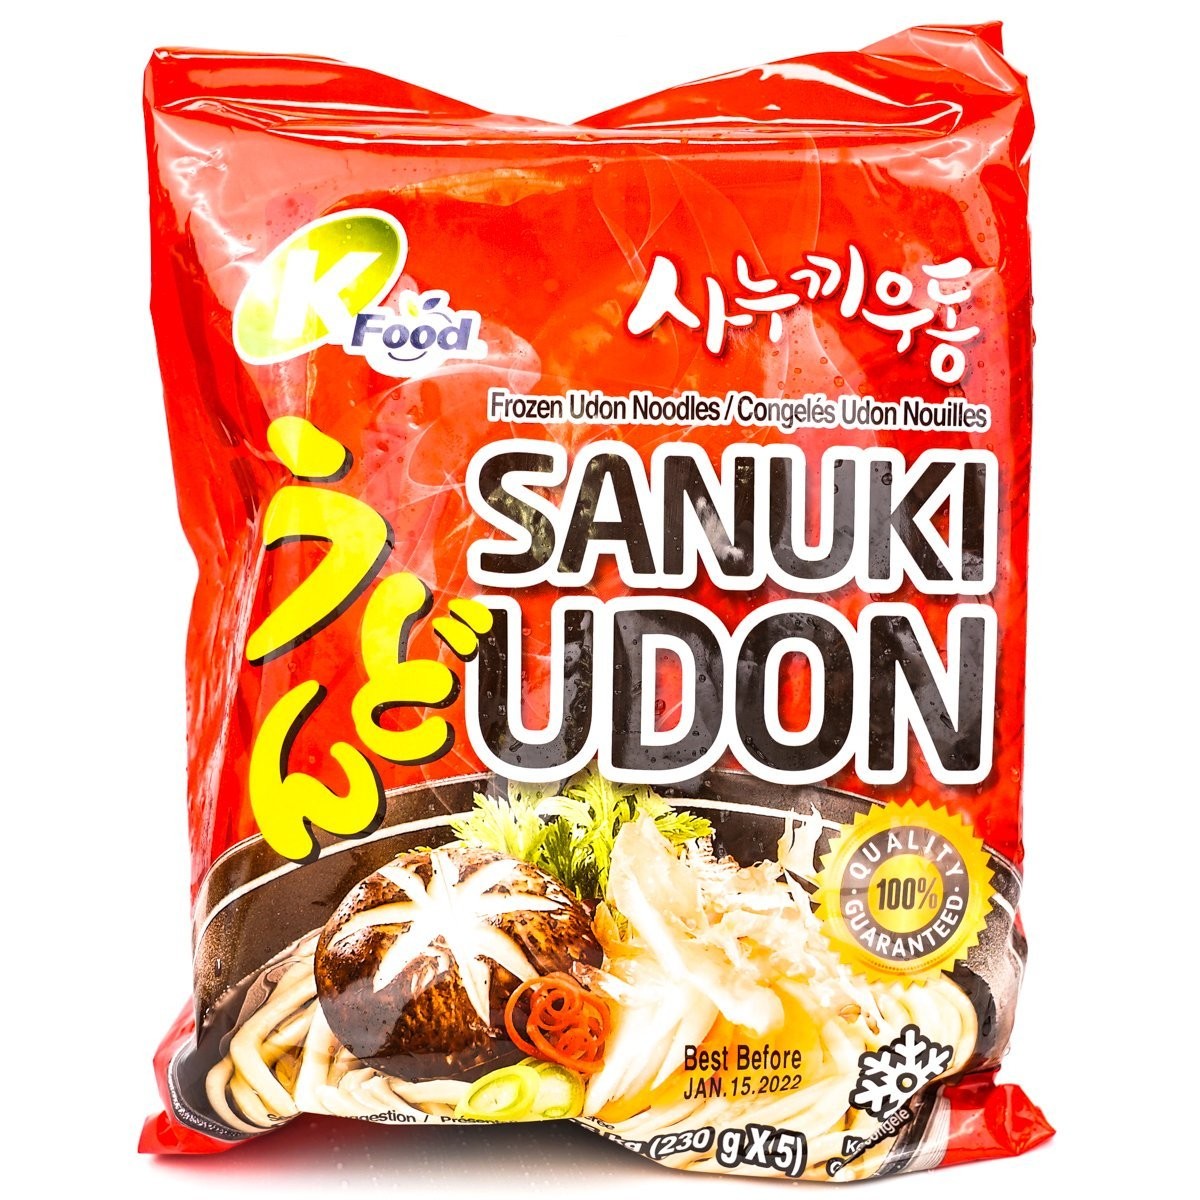 kfood-udon-noodles-frozen